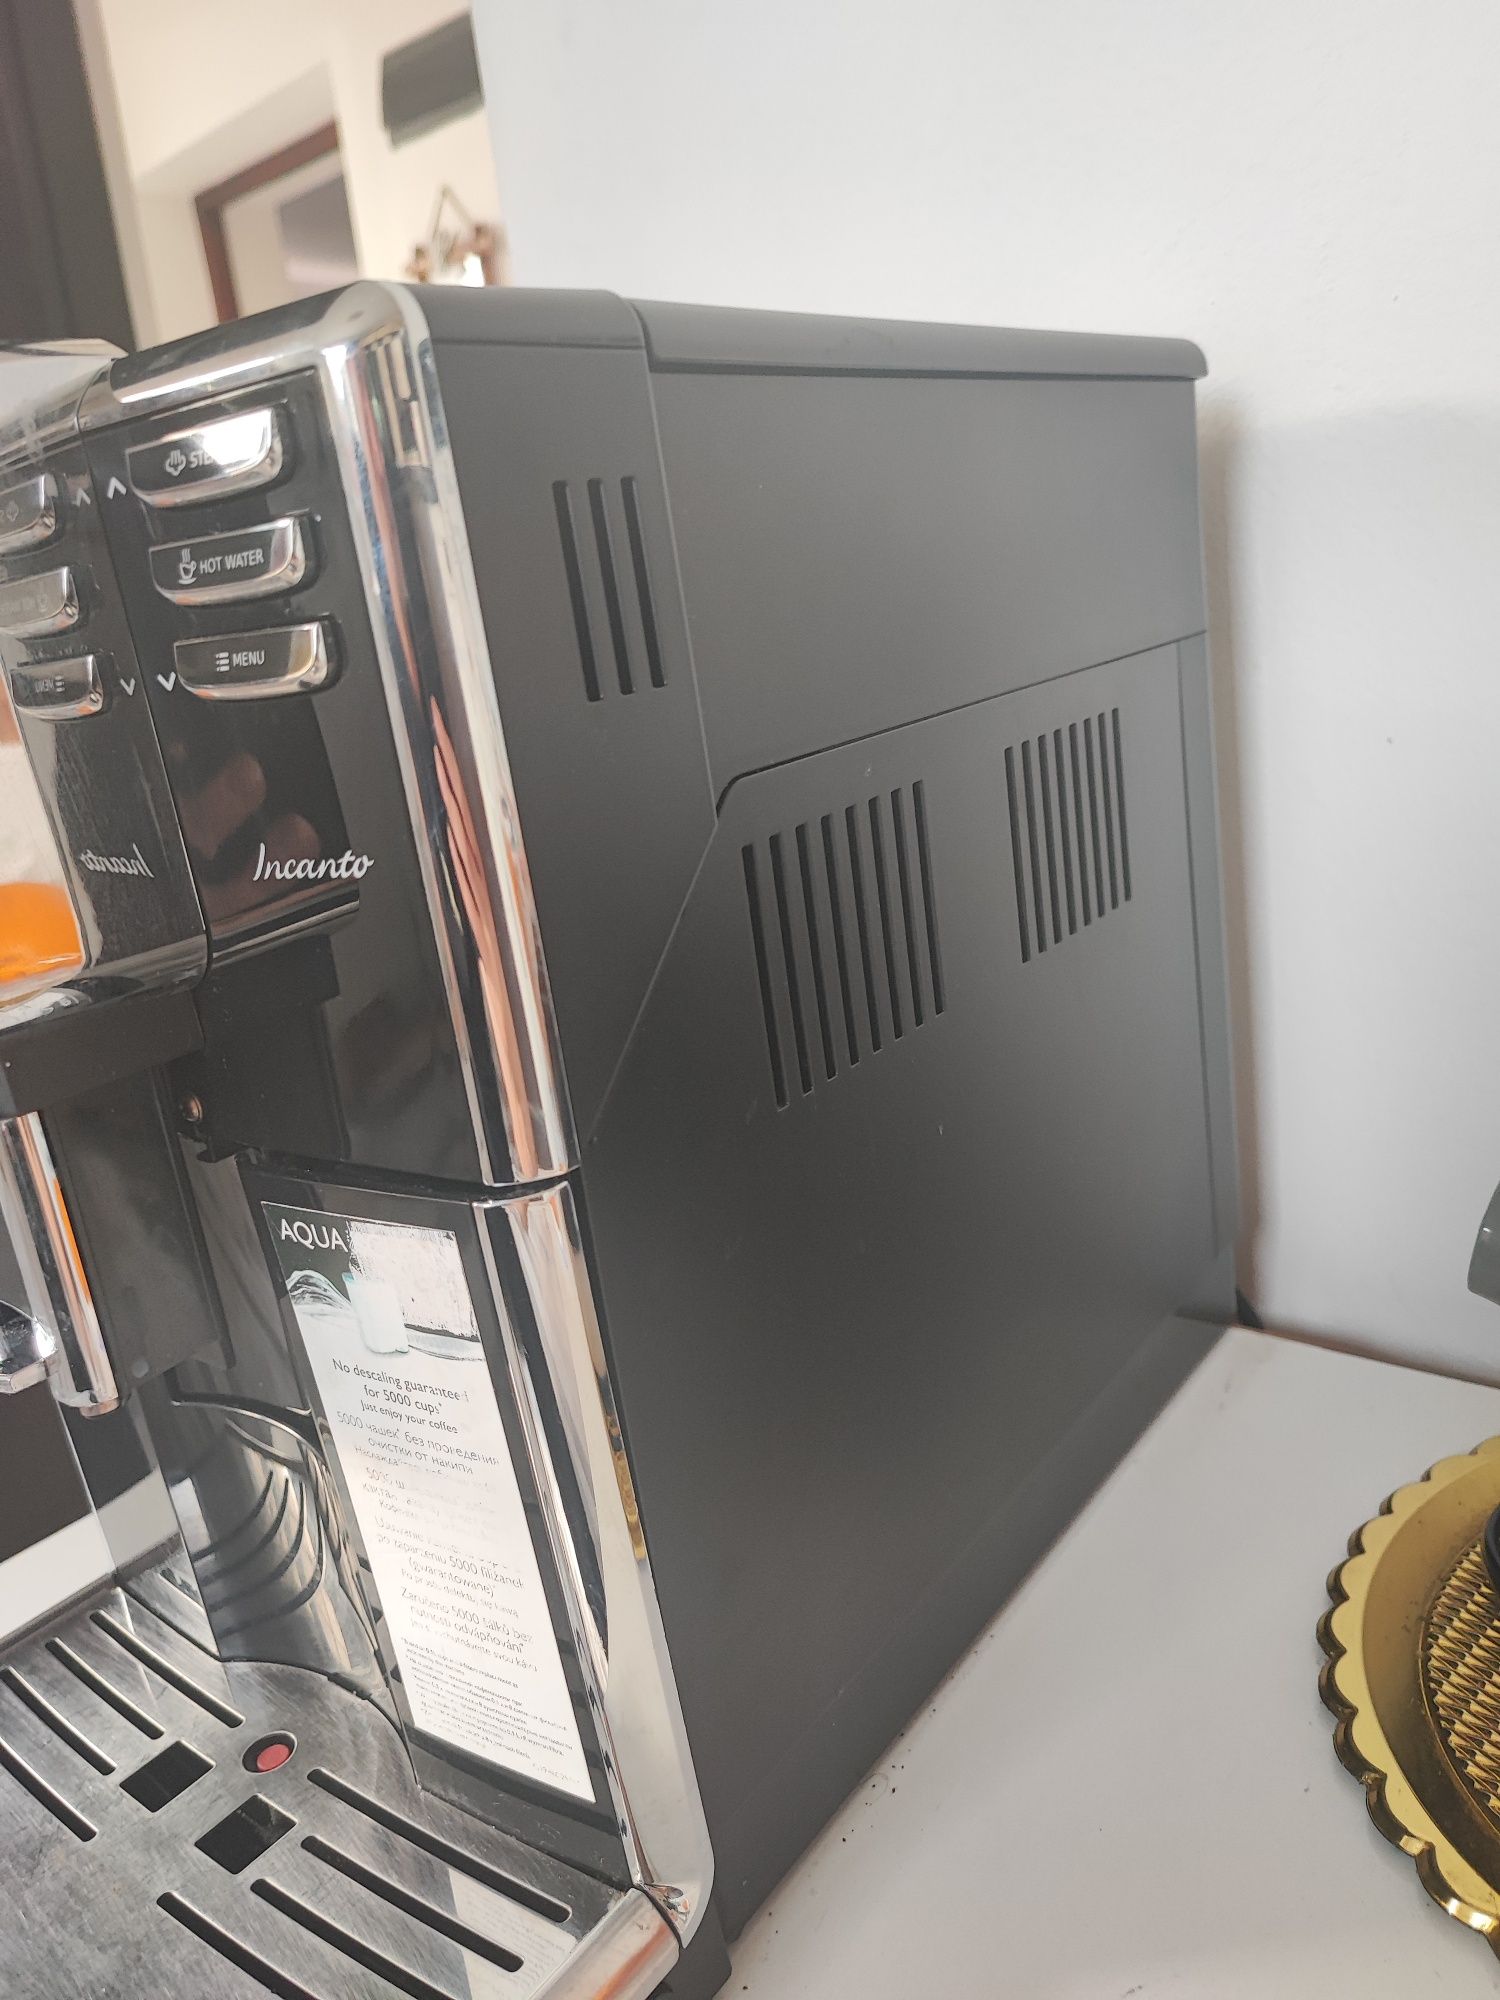 Expresor automat cafea boabe Secco incanto